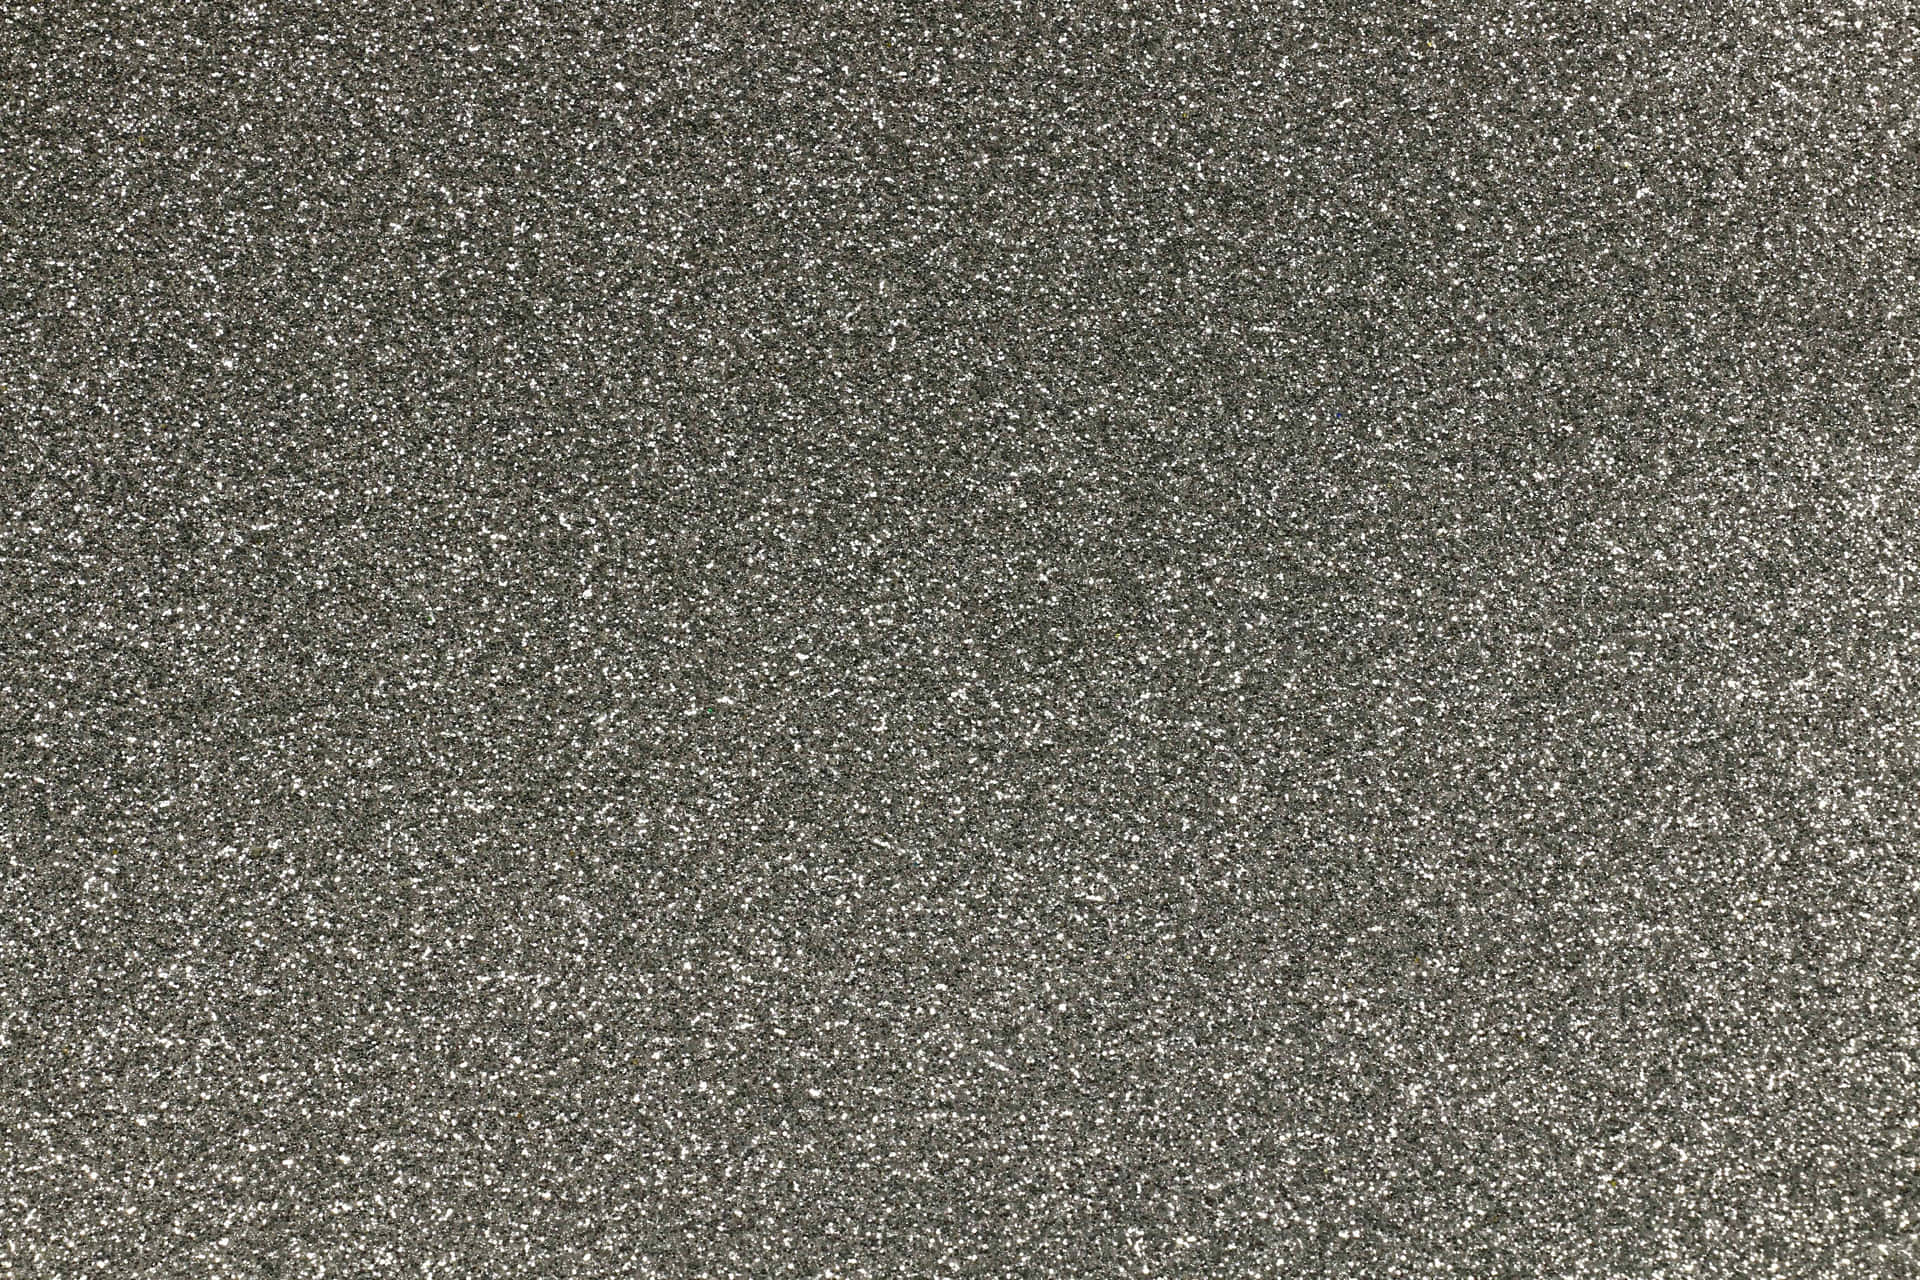 Metallic Silver Background Rough Glitter Texture